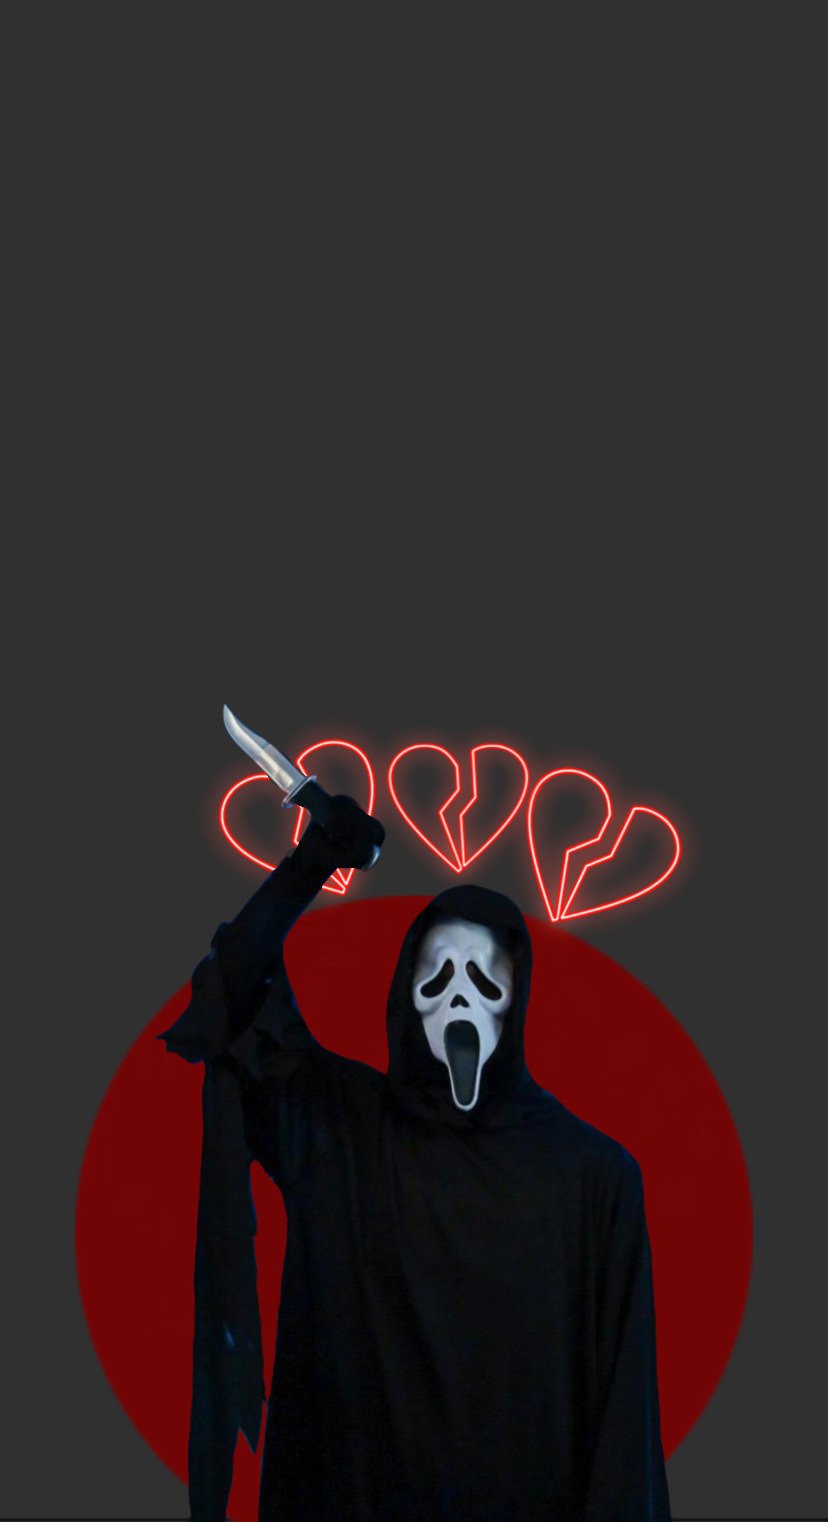 Wallpaper Dar0z Mask Horror Ghostface Scream  Wallpaperforu